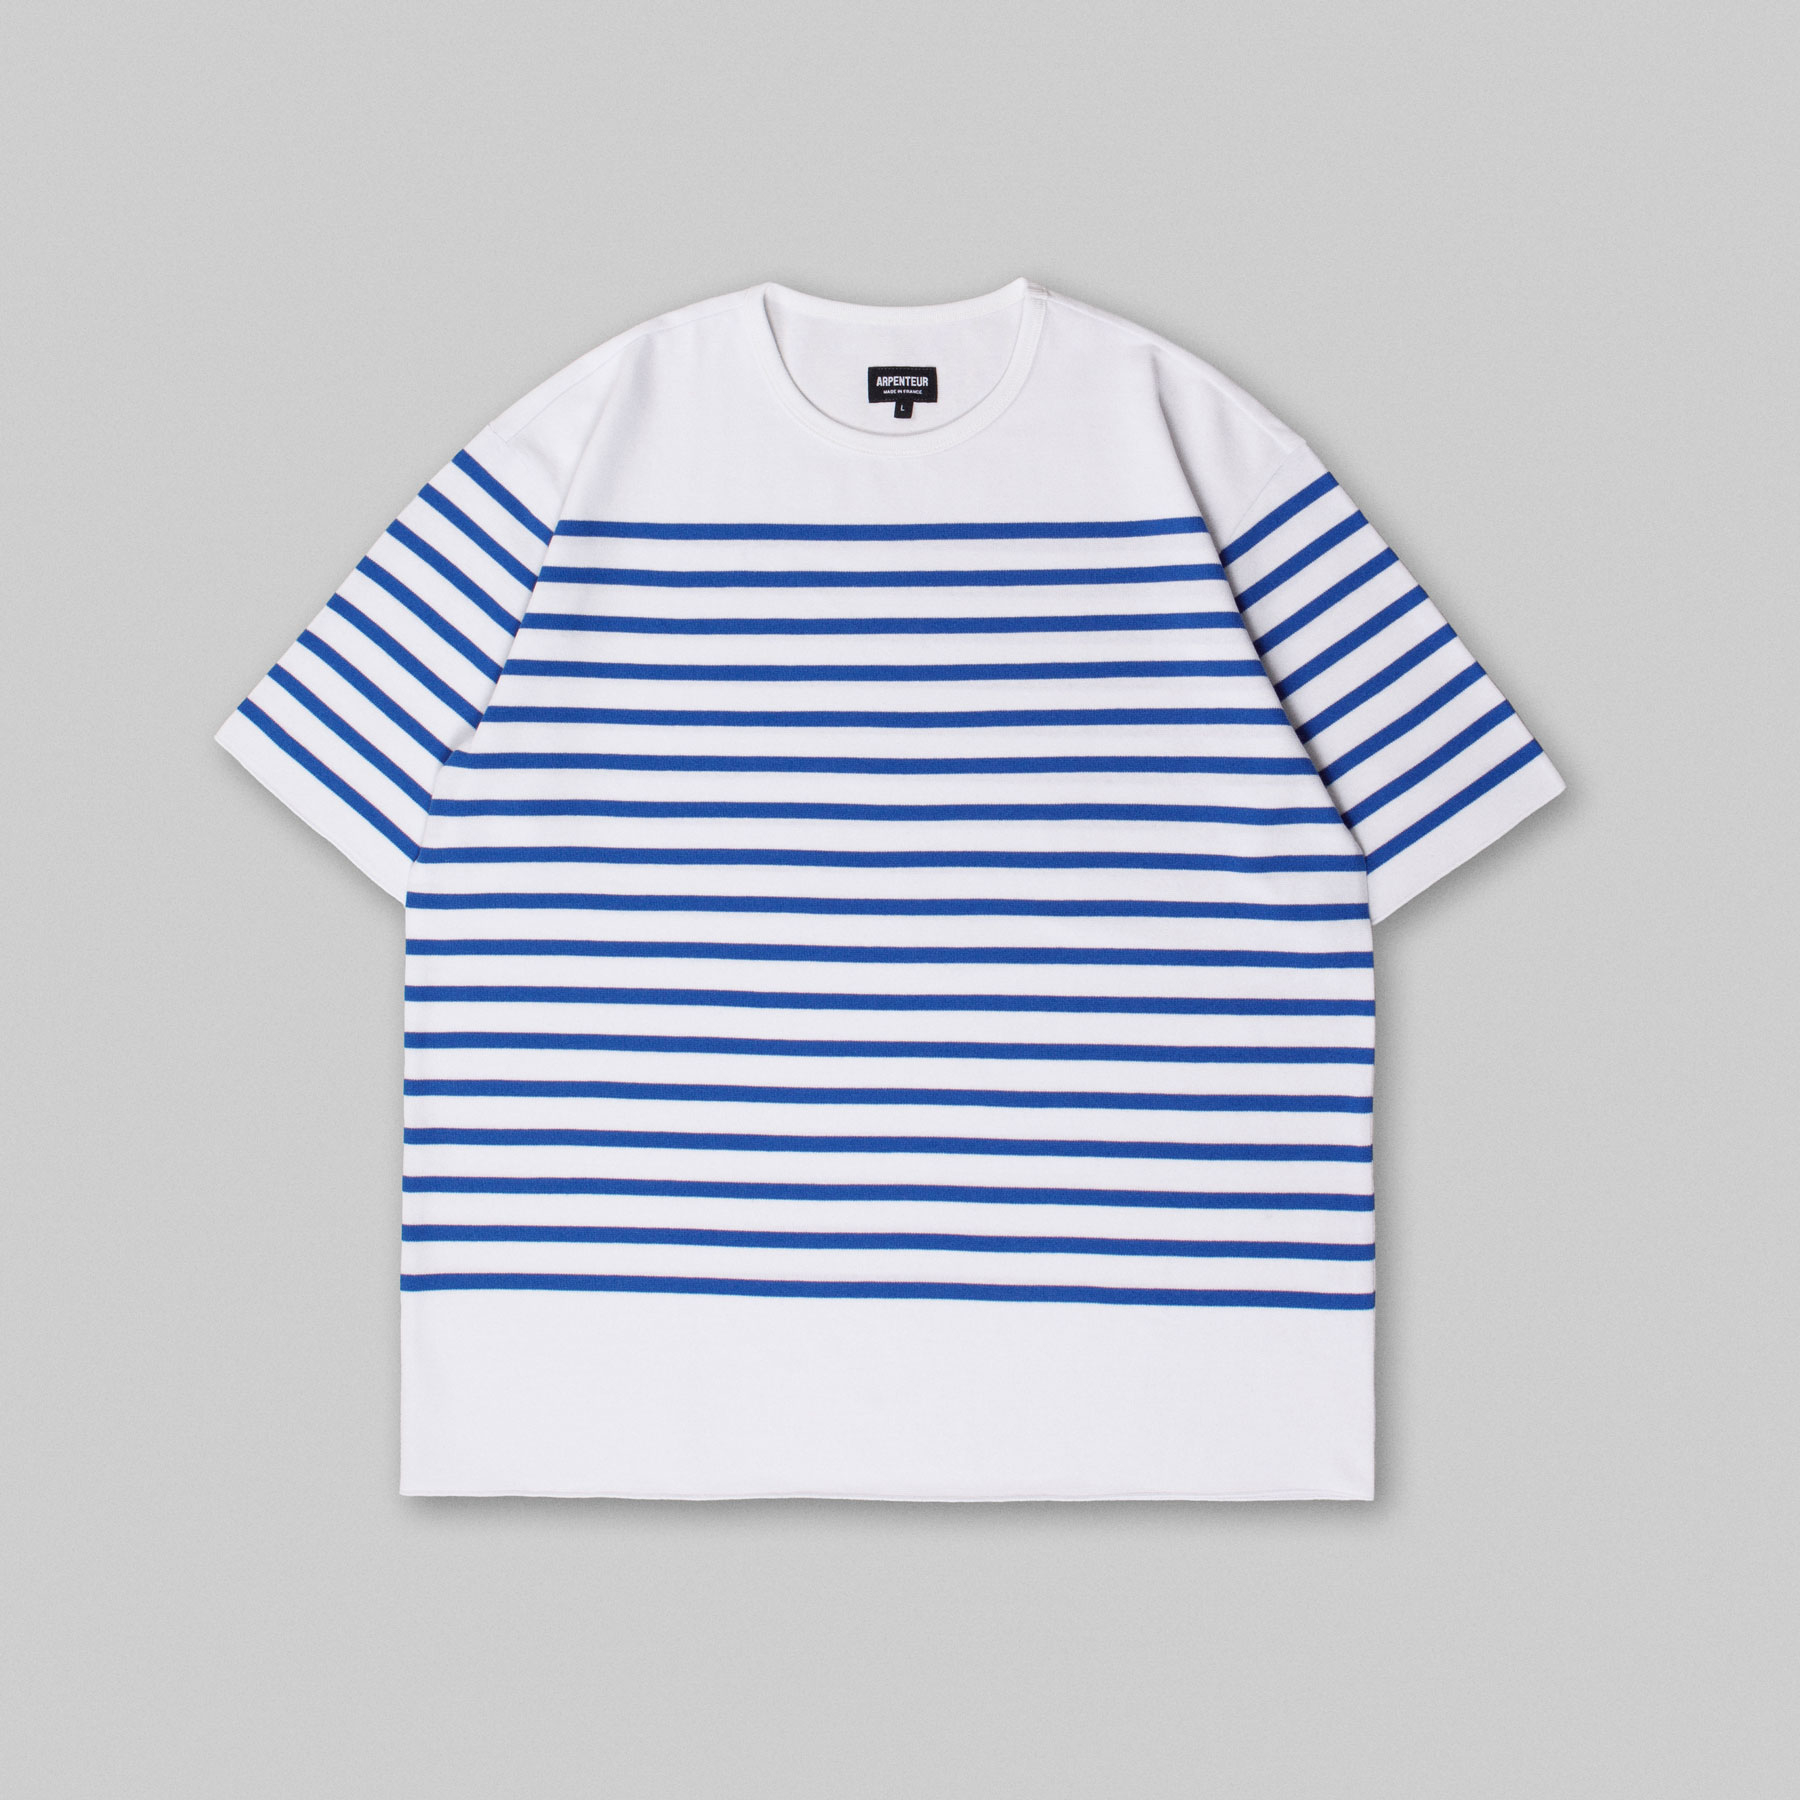 PONTUS t-shirt by Arpenteur in White/Blue color